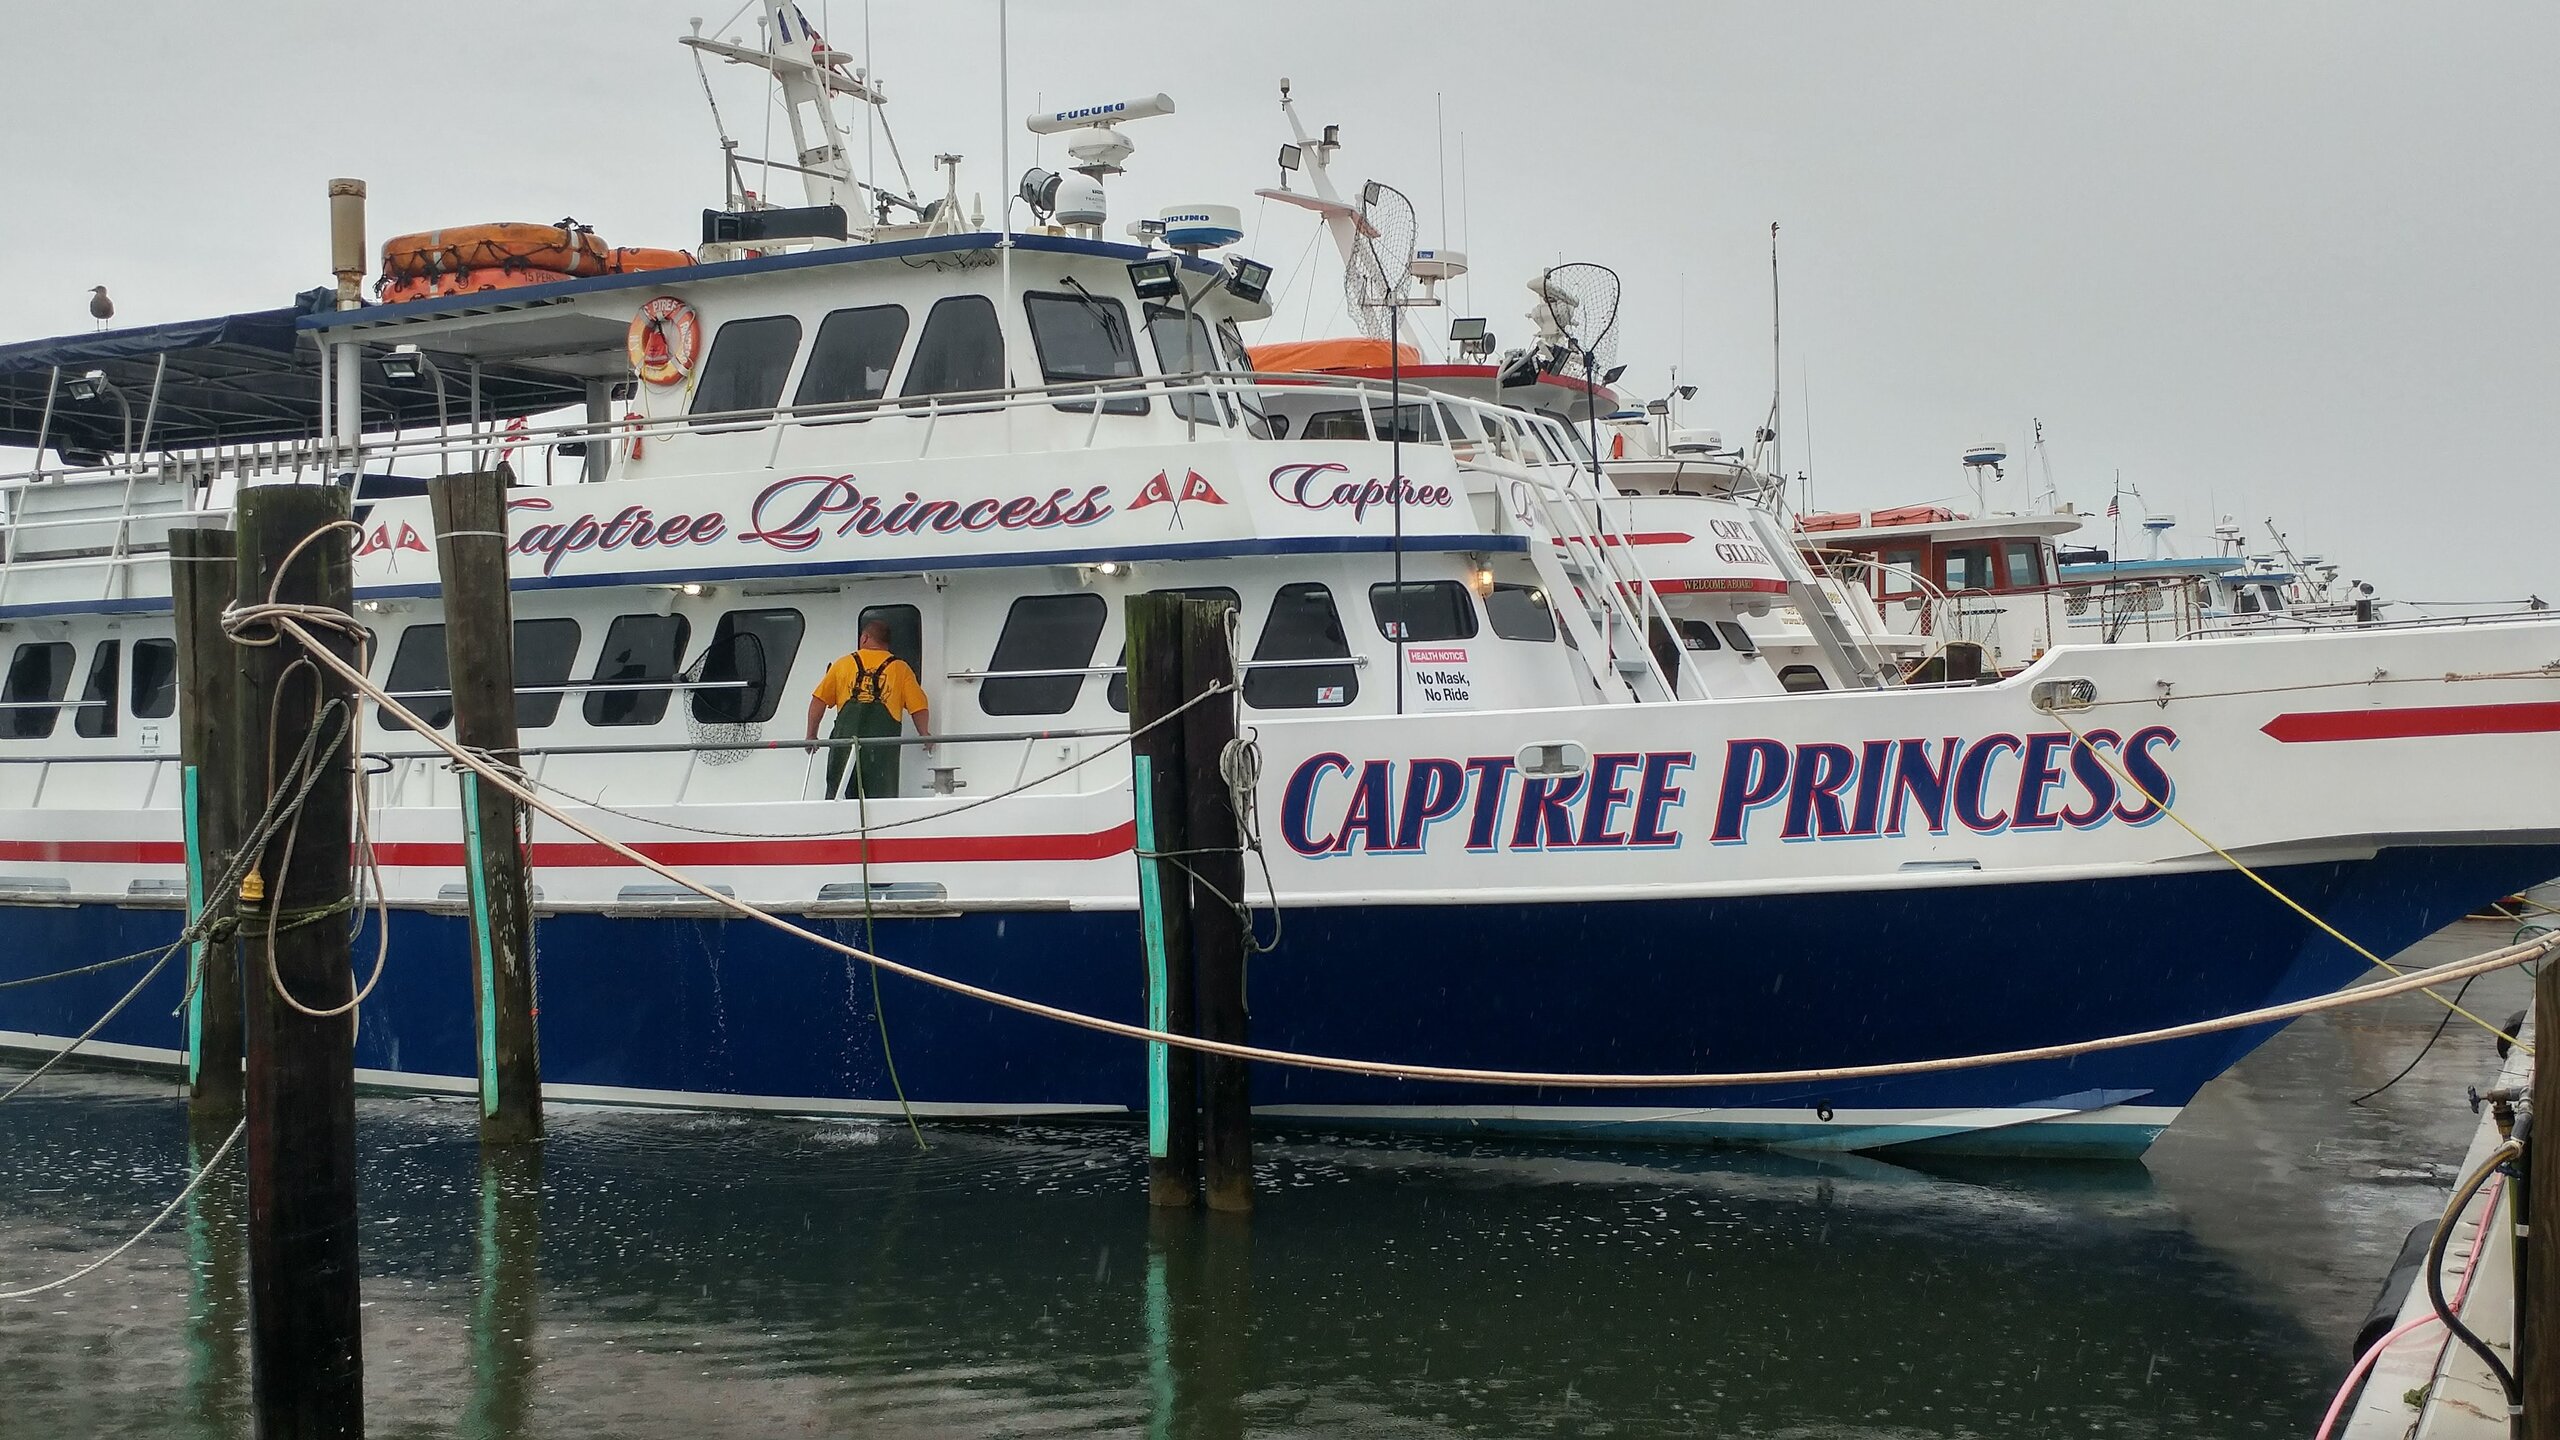 New York Fishing Season Begins for the Captree Princess